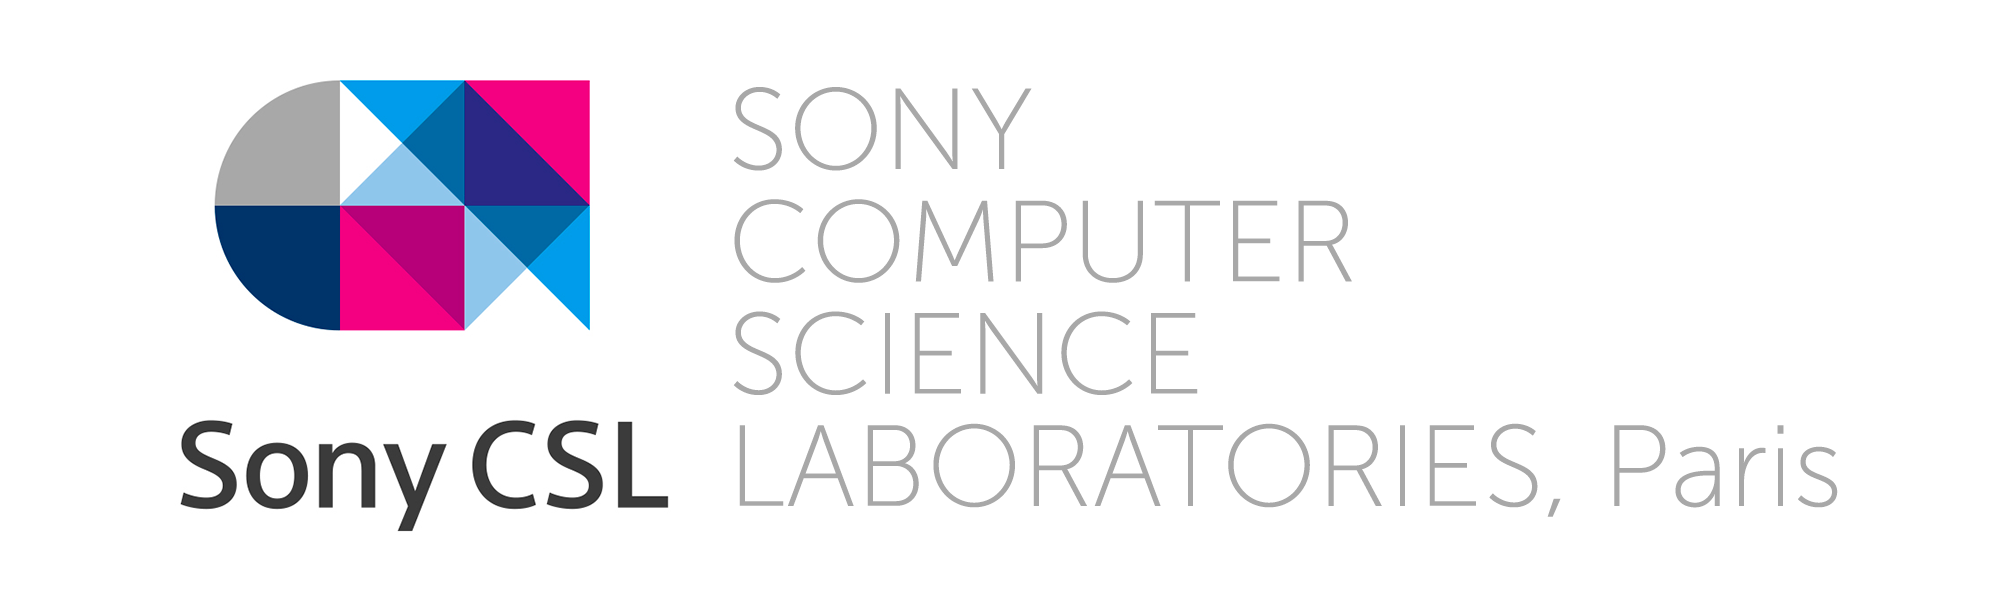 Sony Computer Science Laboratories, Paris